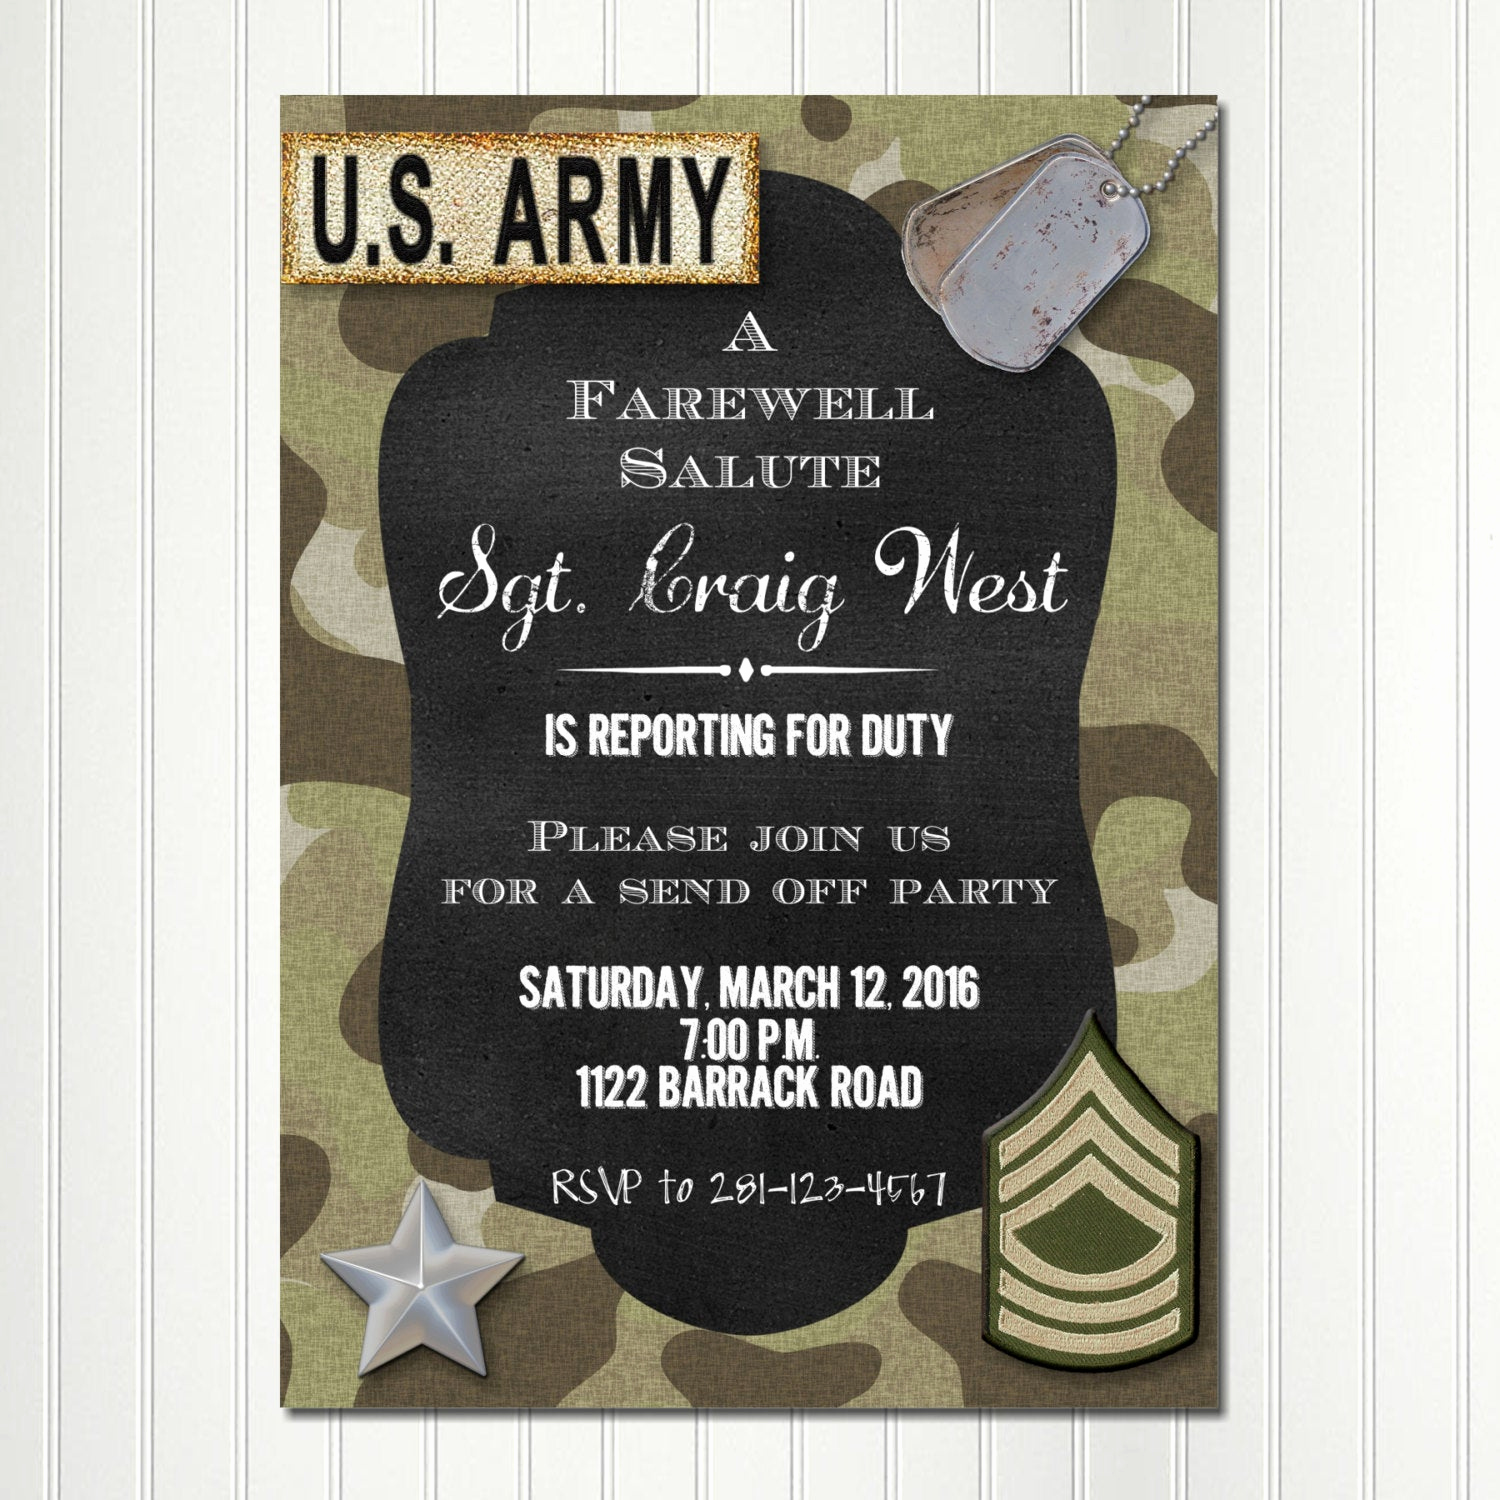 Send Off Party Invitation Fresh Army Invitation Deployment Party Send F Invitation Going